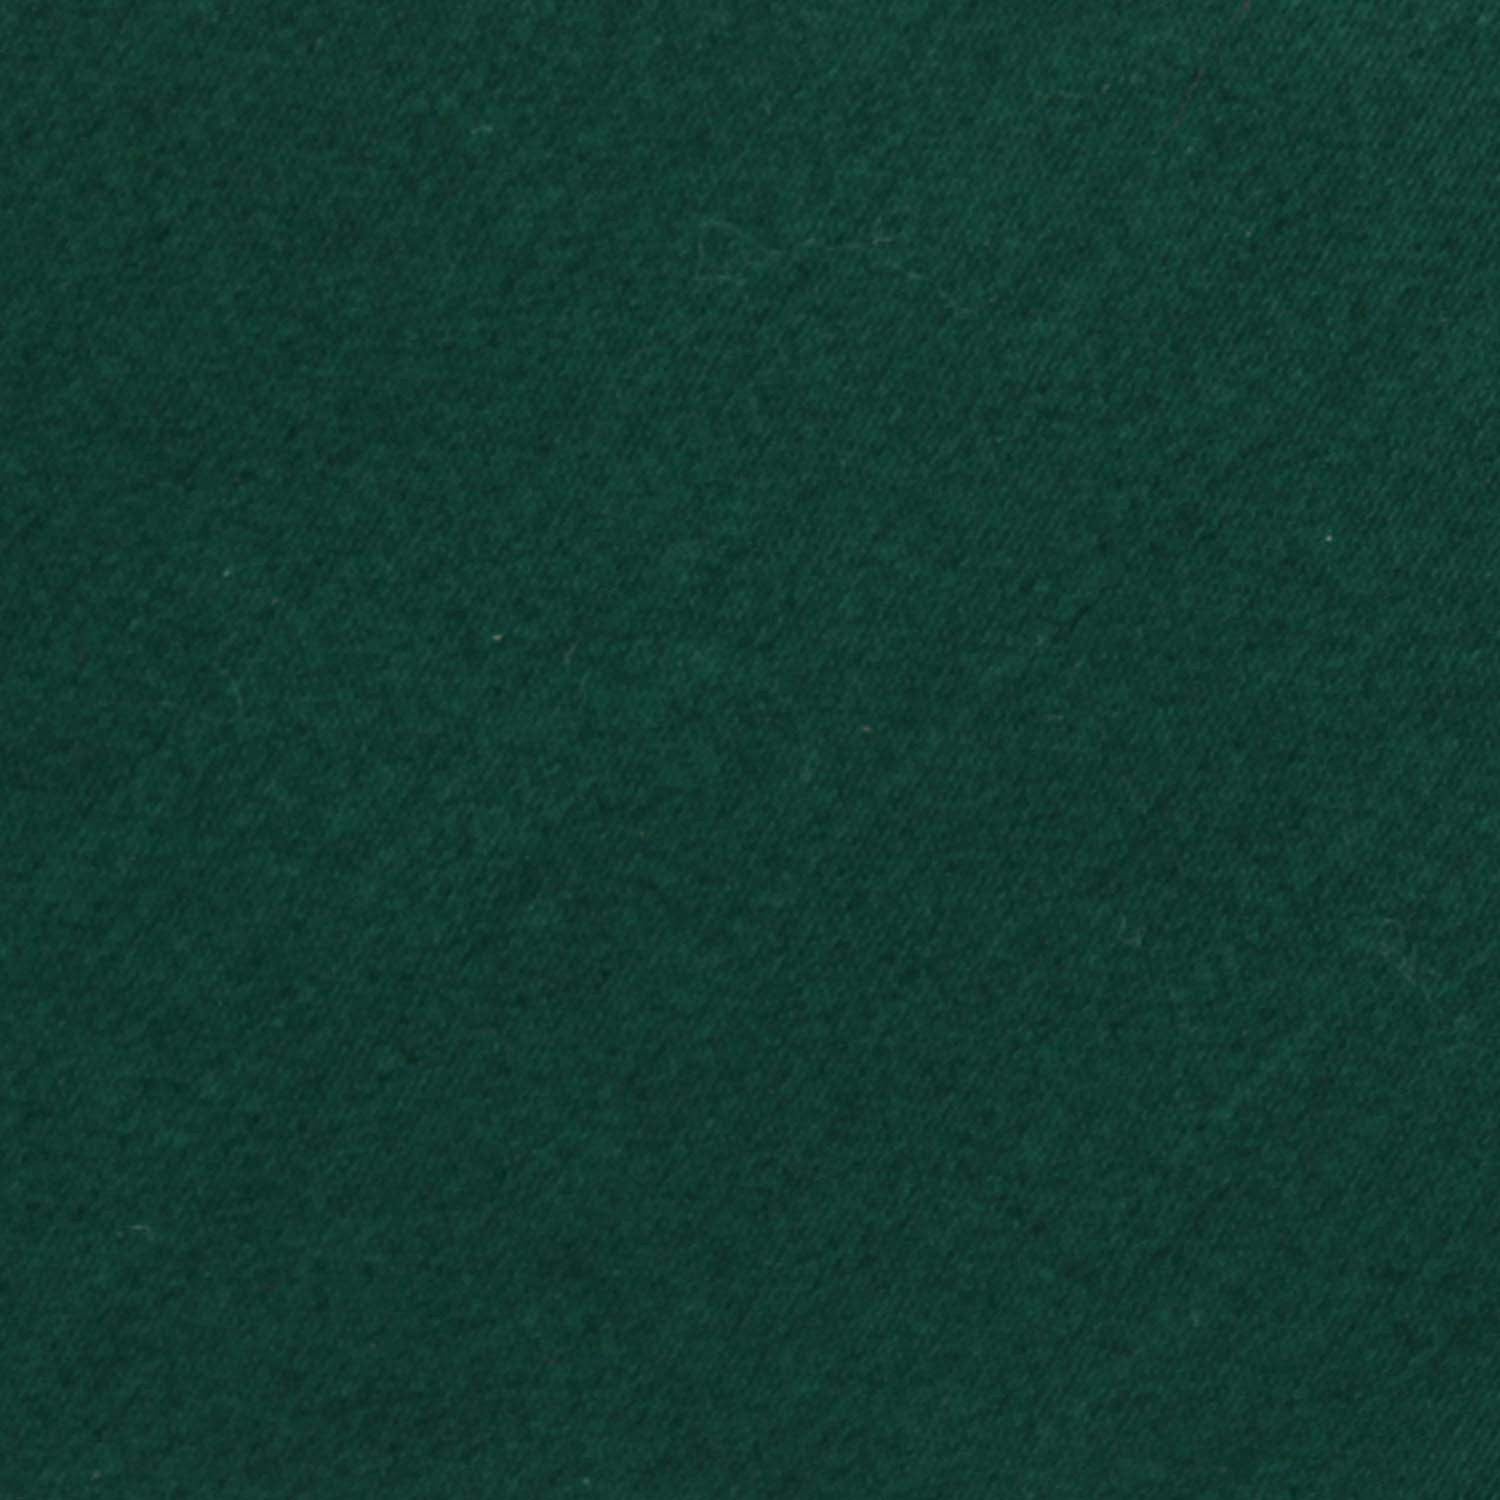 Emerald Green Cotton Fabric Self Tie Bow Tie C162